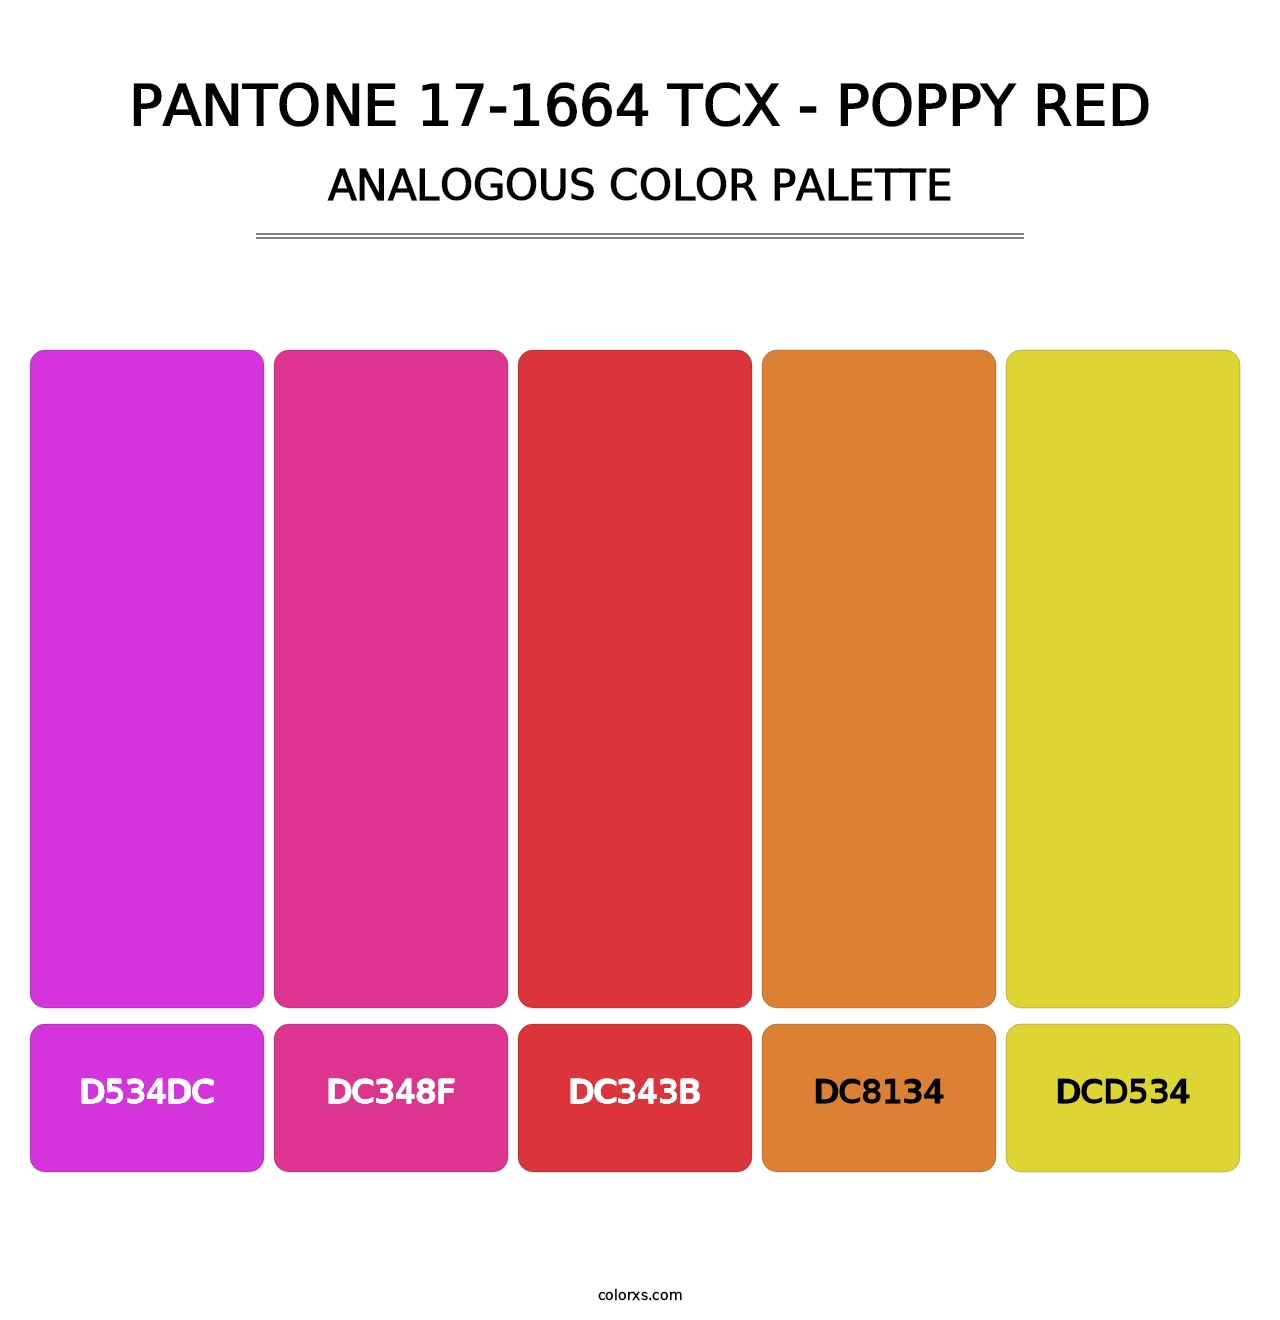 PANTONE 17-1664 TCX - Poppy Red - Analogous Color Palette